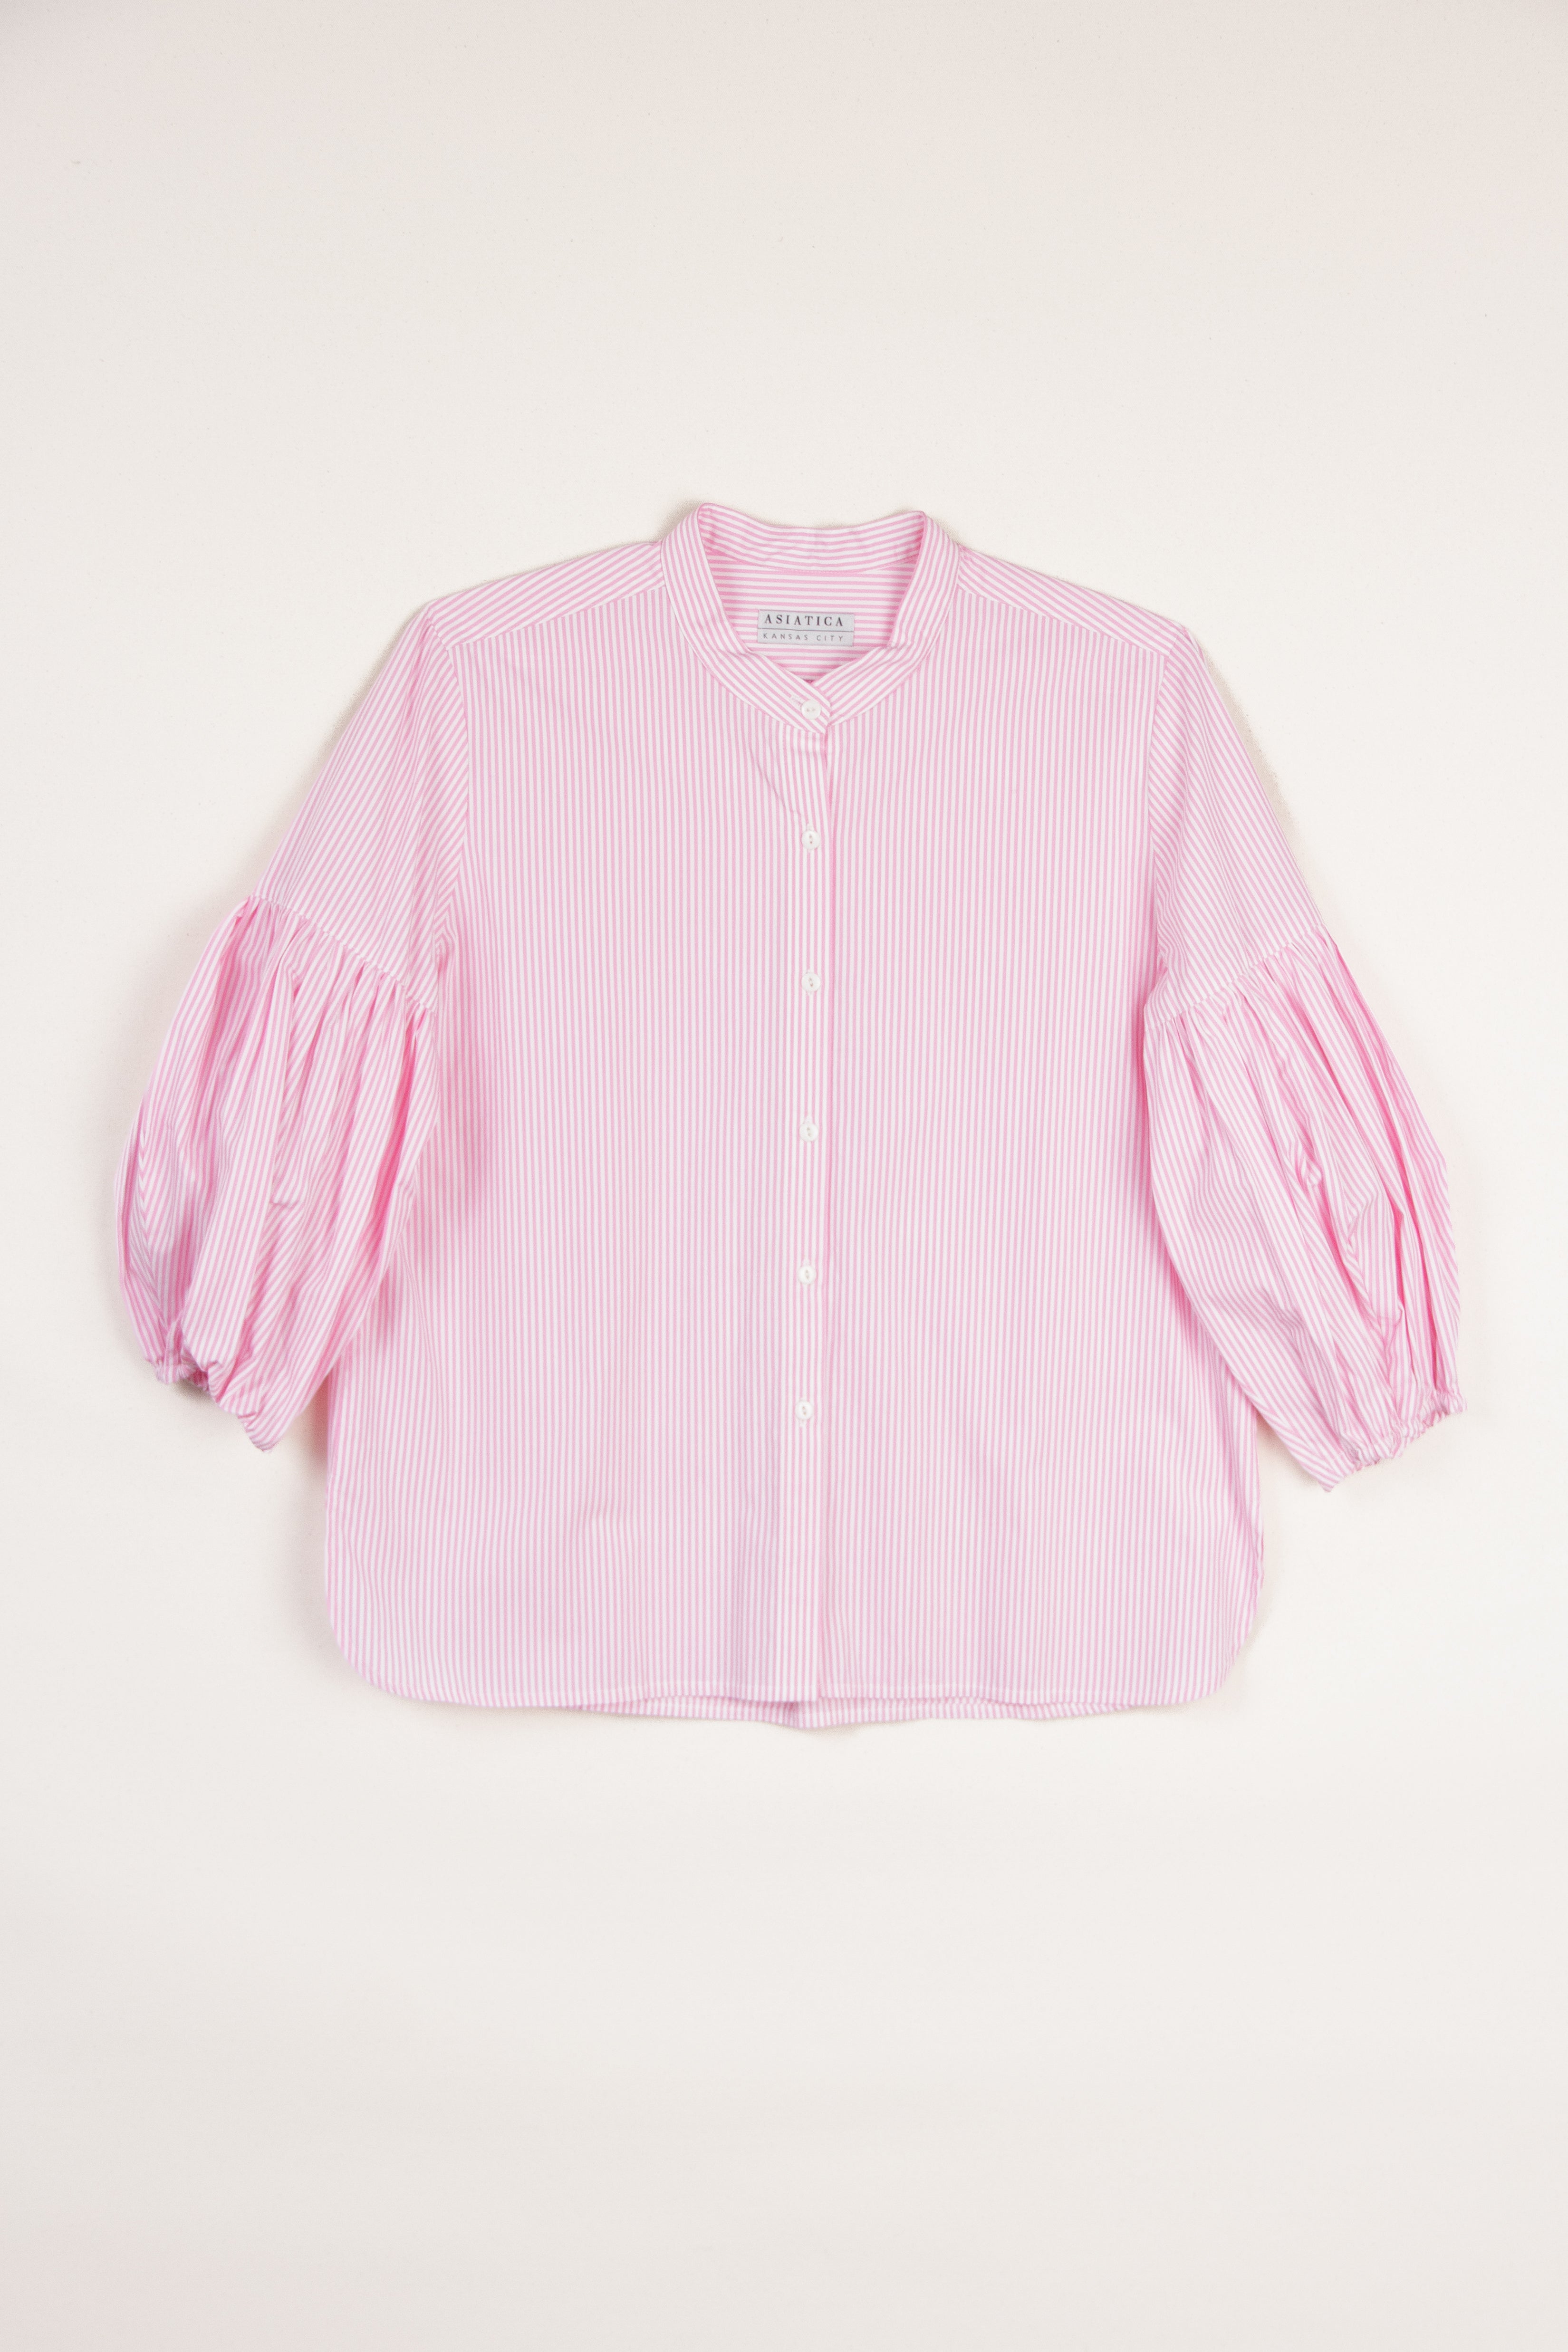 Dandelion Shirt in Pink Striped Cotton Shirting